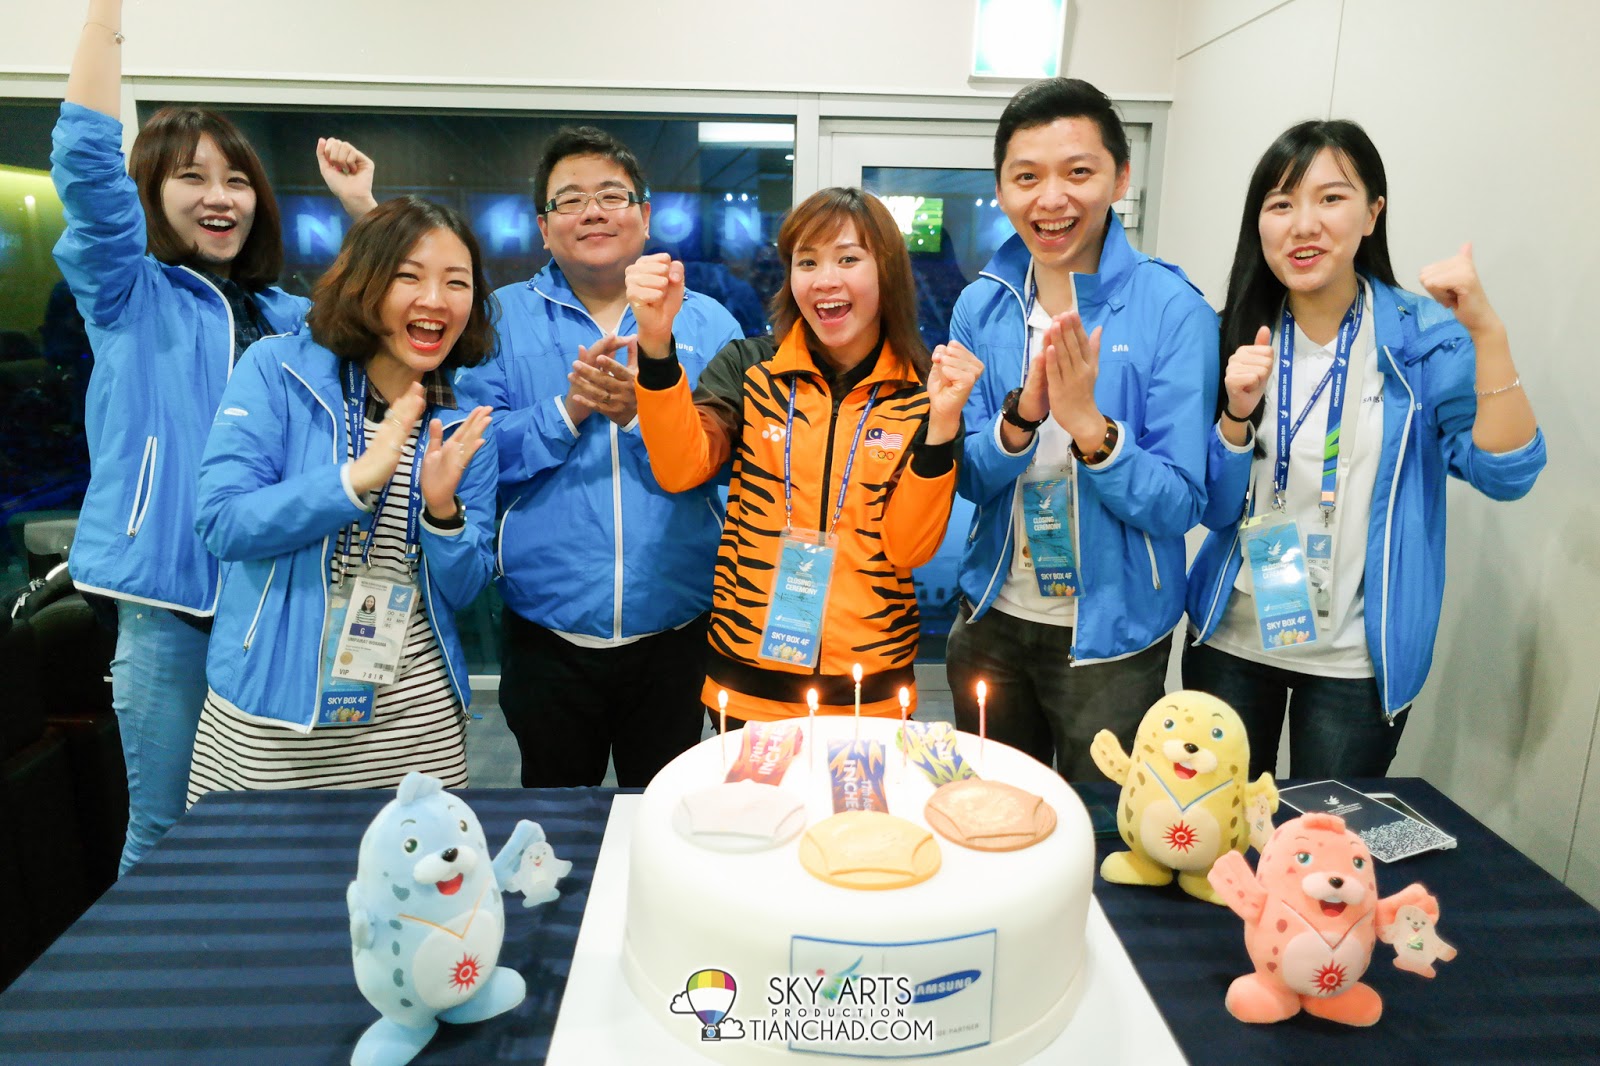 http://1.bp.blogspot.com/-b1MsfCXcpFQ/VDOeIYYITMI/AAAAAAAB8hE/WKpscp0T_bw/s1600/Incheon-Asian-Games-2014-Closing-Ceremony-TianChad.com-5169.jpg